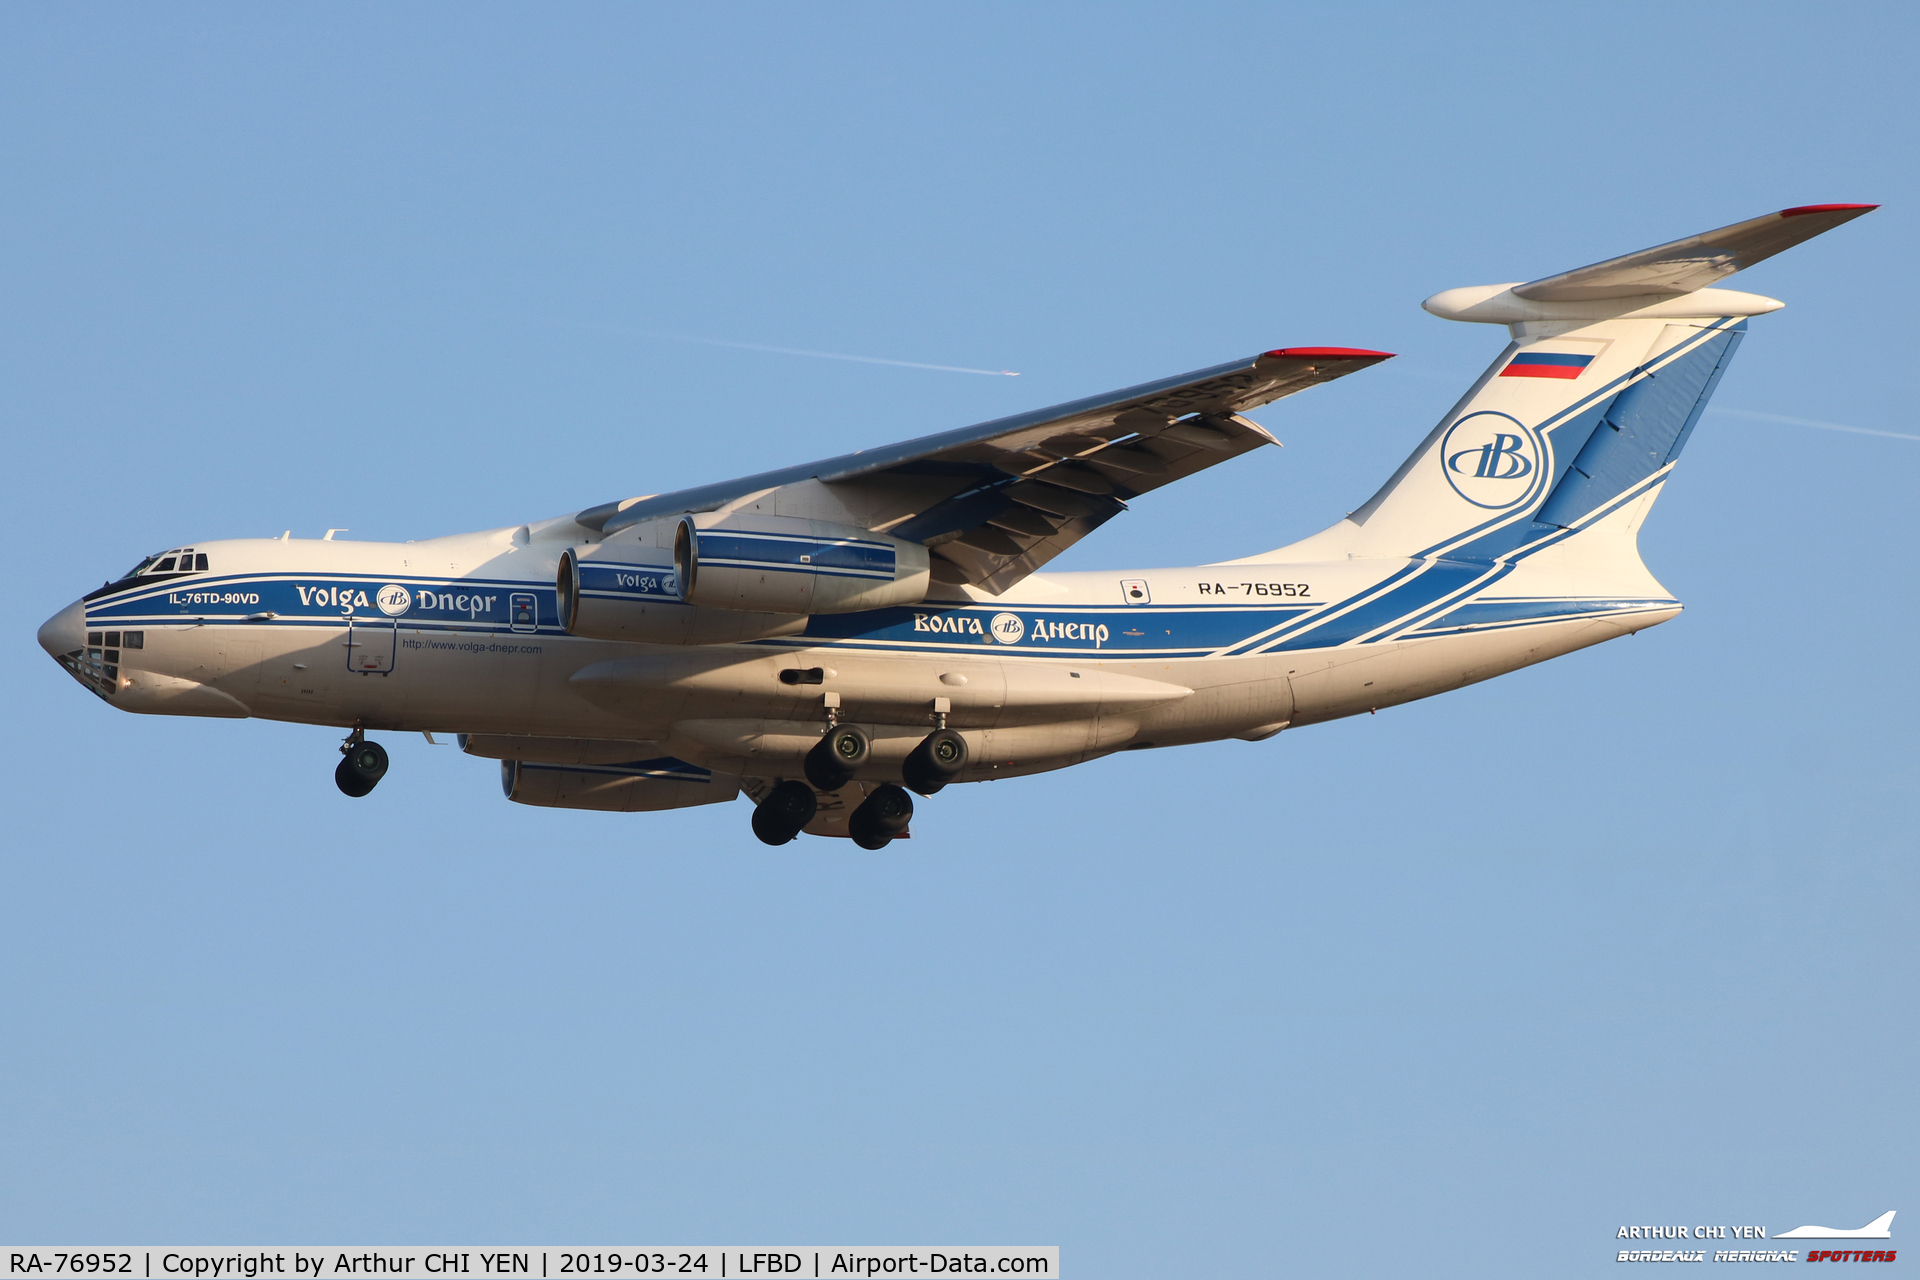 RA-76952, 2010 Ilyushin Il-76TD-90VD C/N 2093422743, Nice visitor at BOD Sunday evening. Flight VI1851 from Châteauroux.